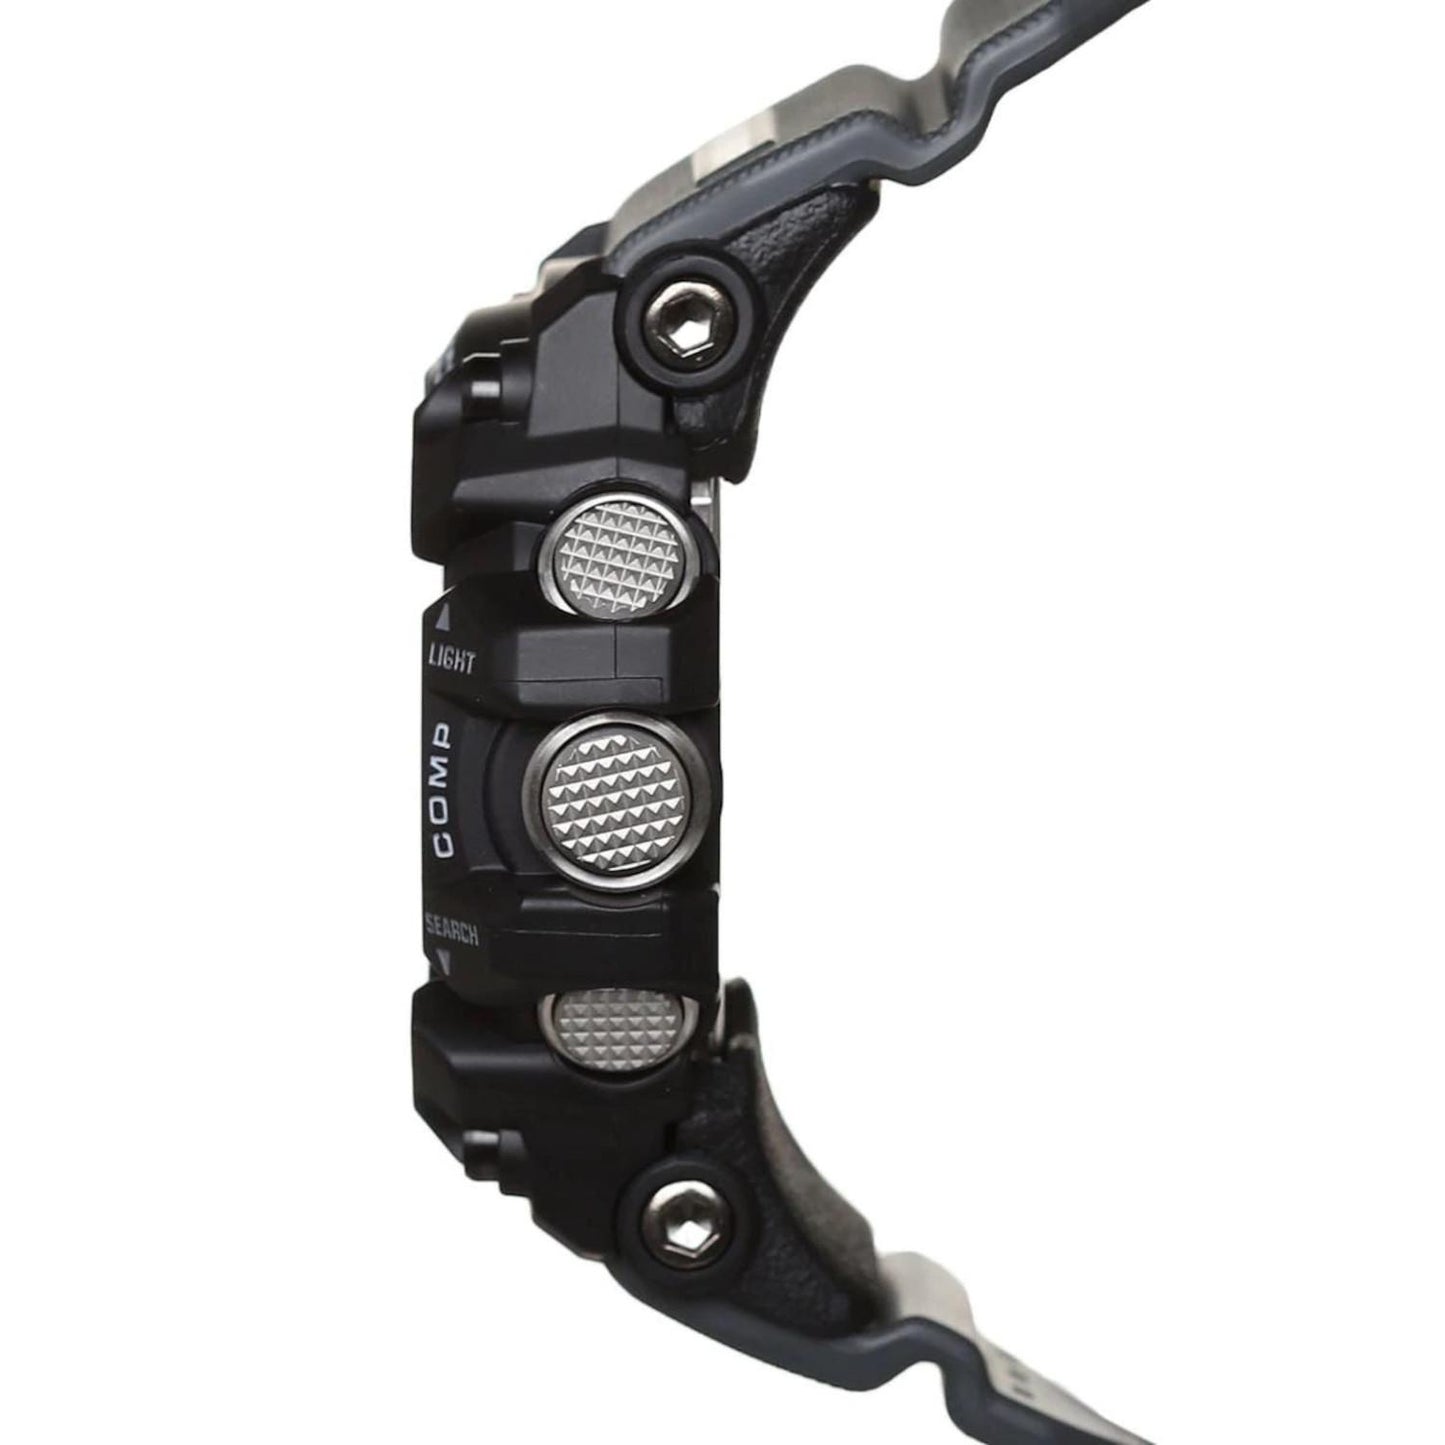 Reloj Casio GG-1000-1A8CR G-Shock MUDMASTER Protection-Negro